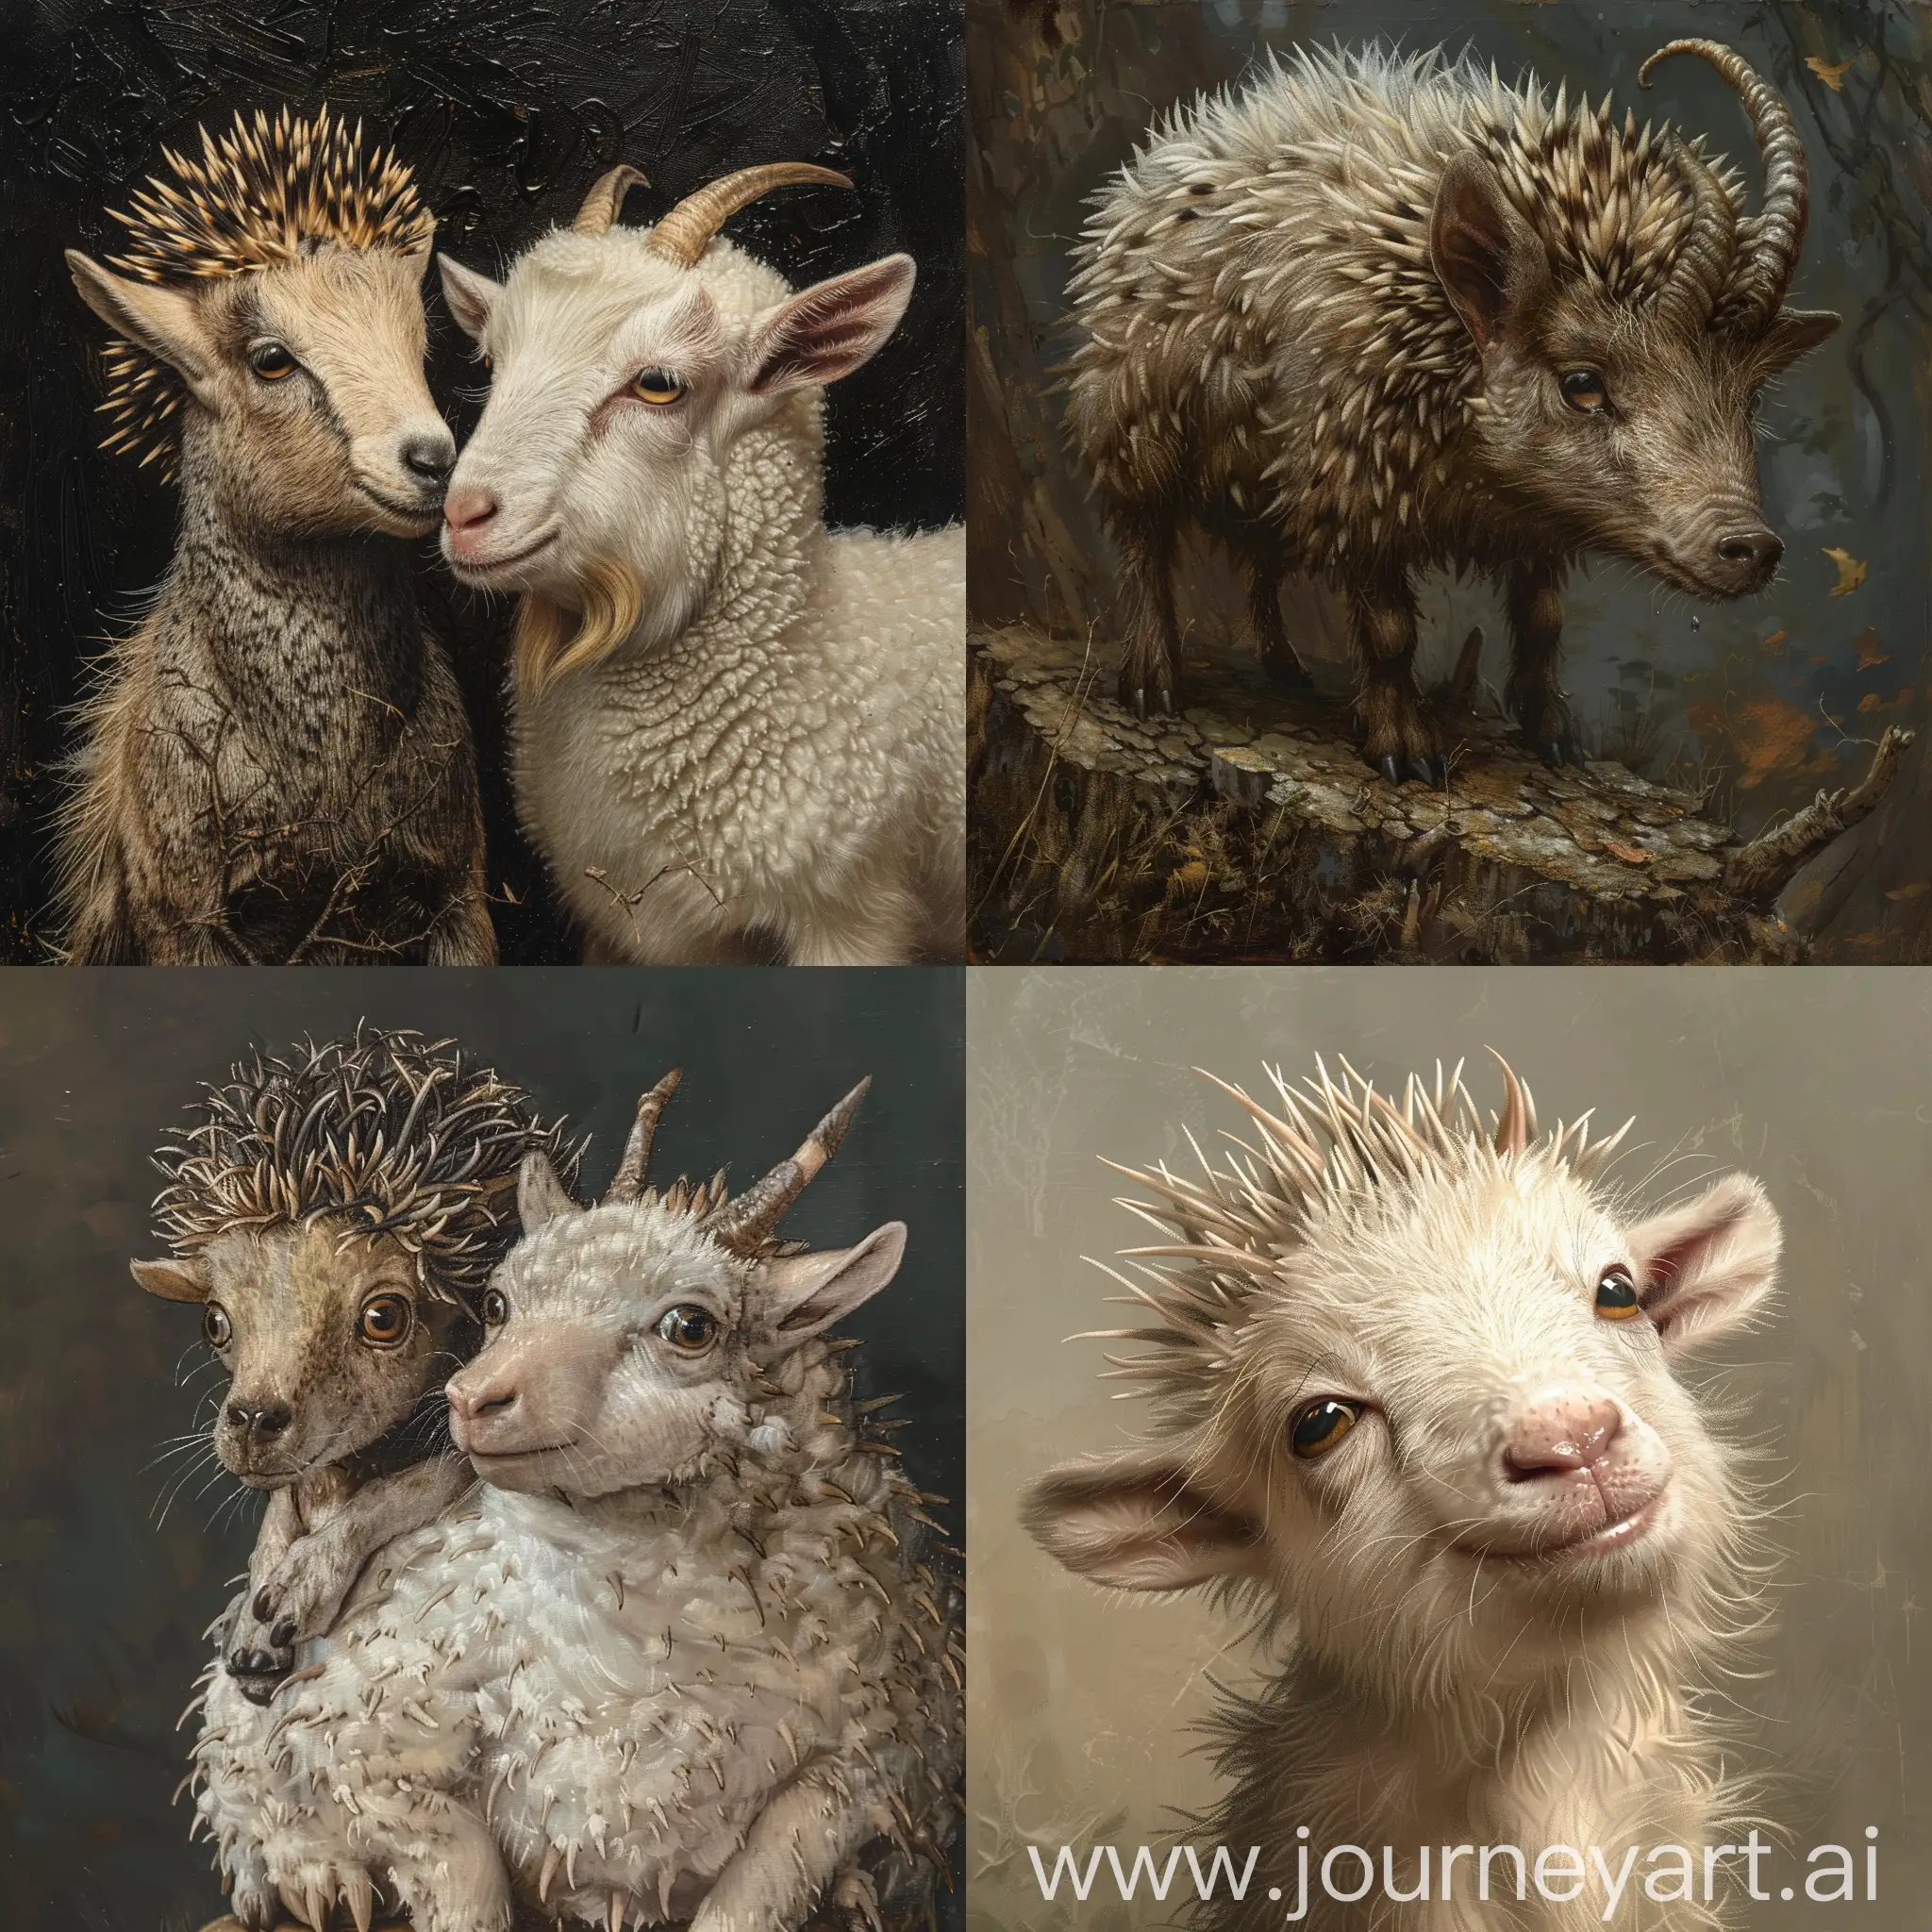 Hedgehog-and-Goat-Hybrid-Creature-Illustration